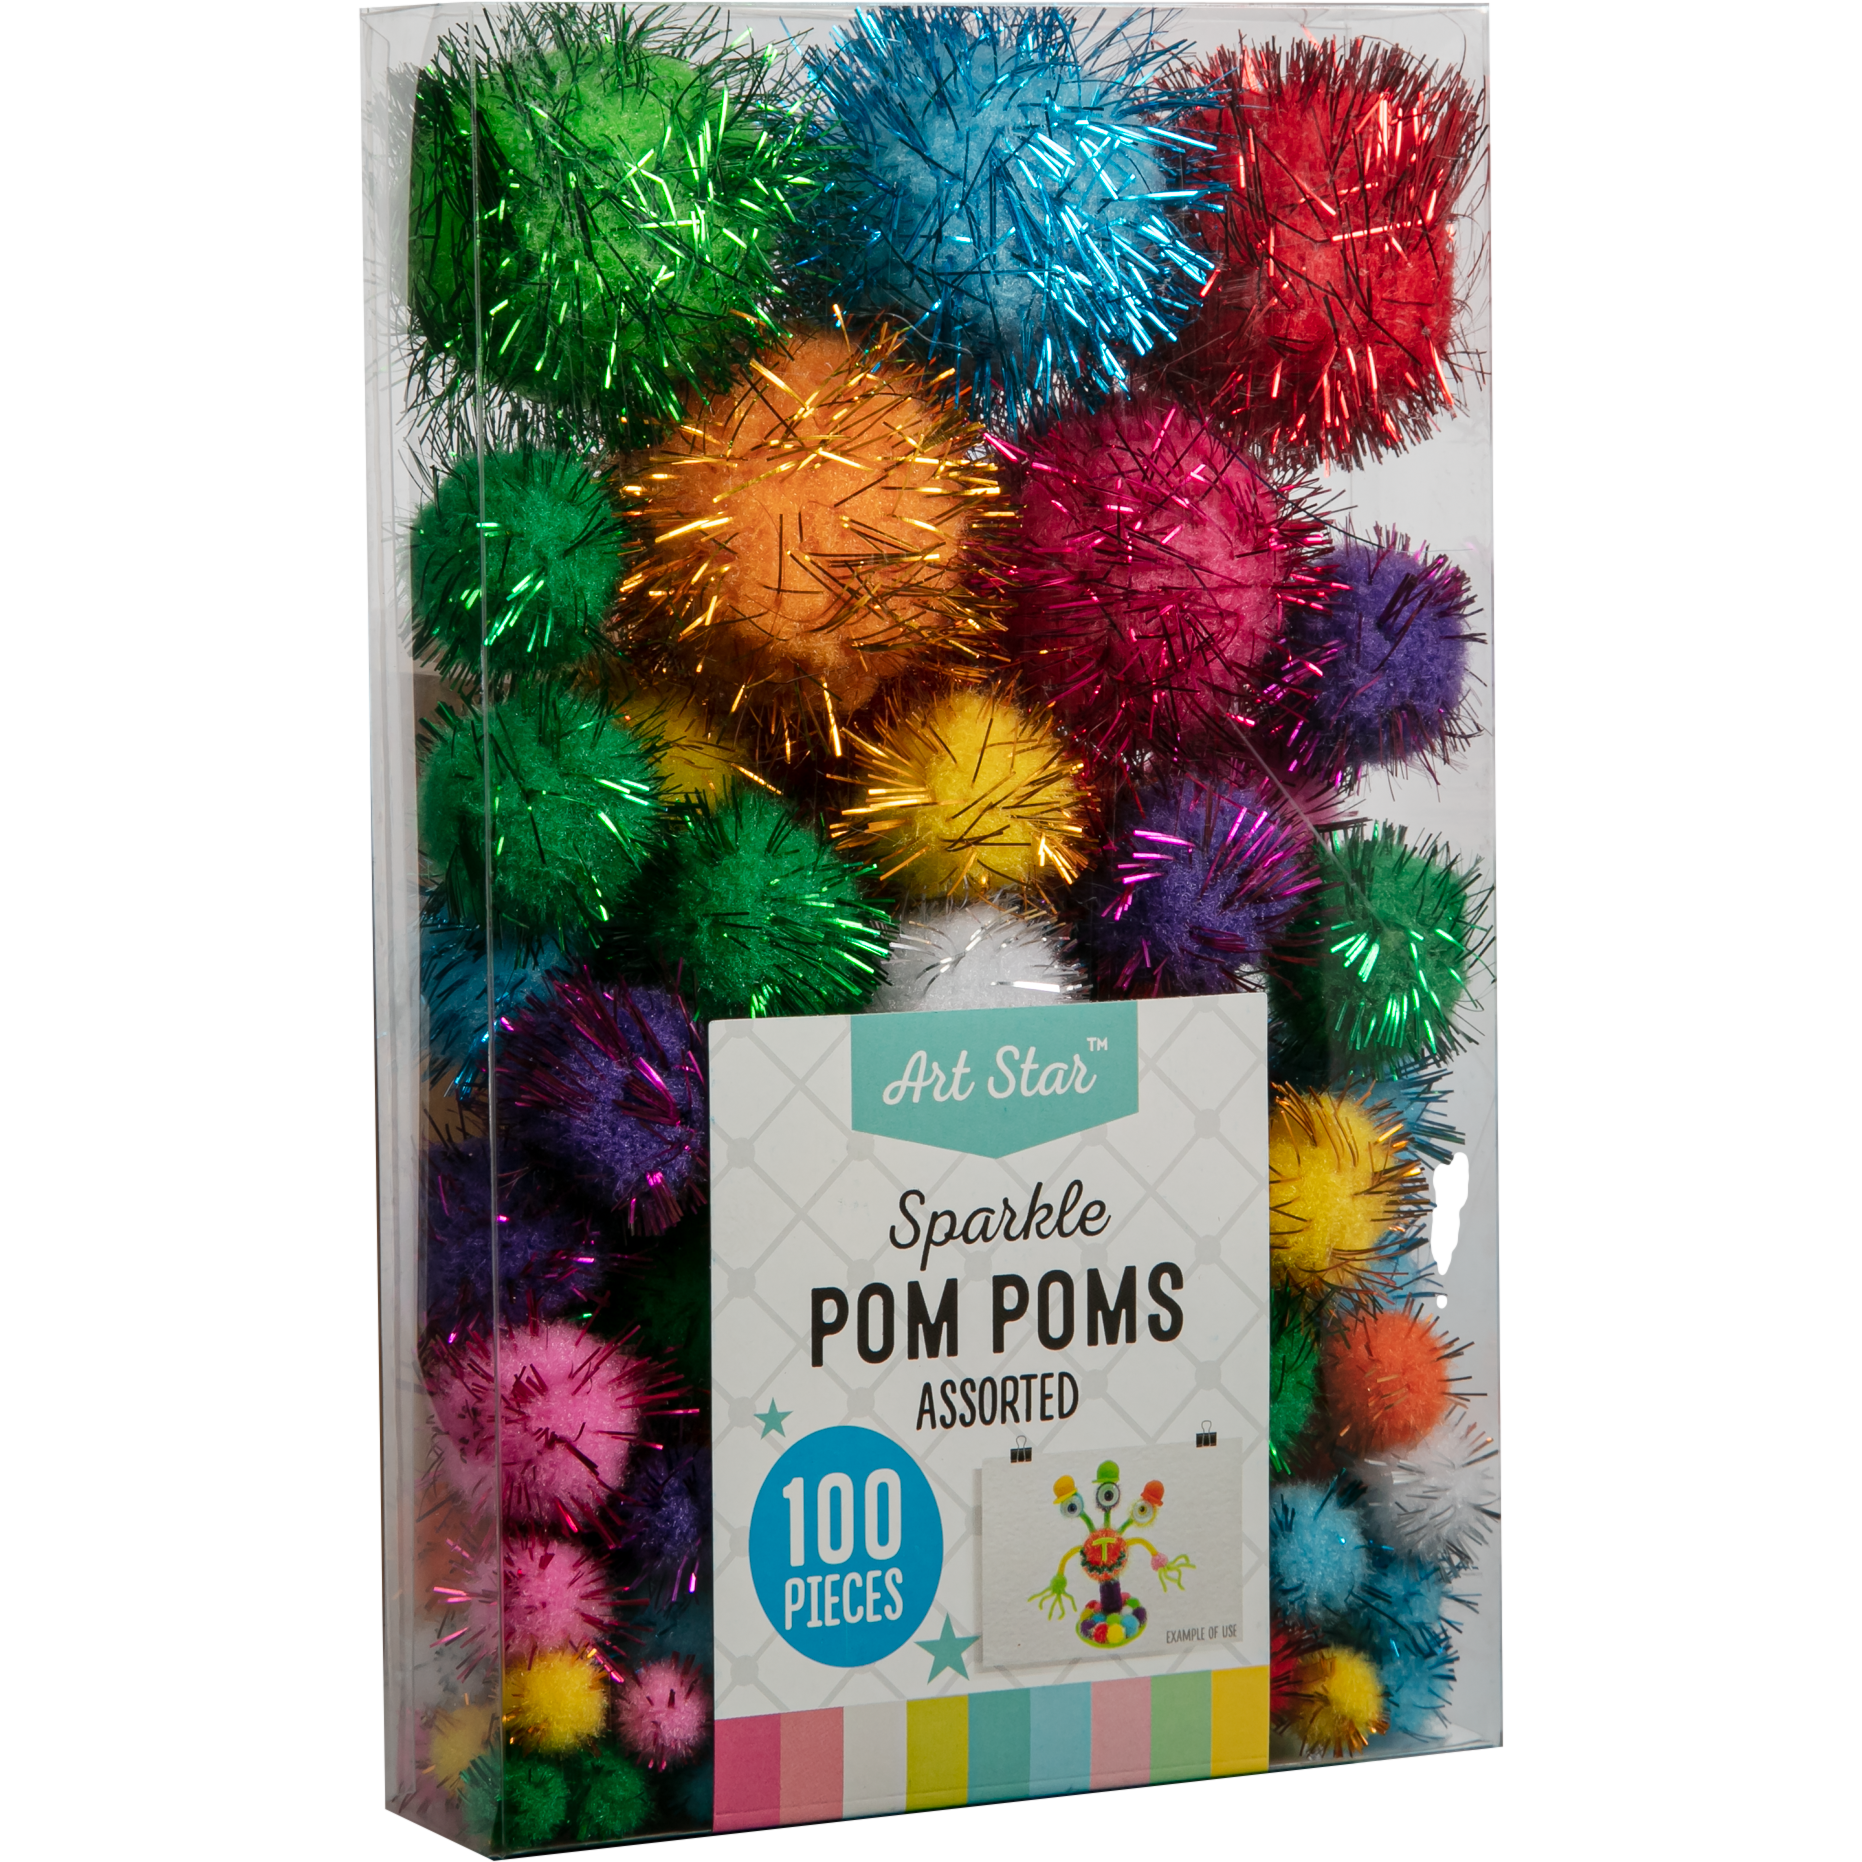 Hello Hobby Shimmers Pom Poms - 100 Piece